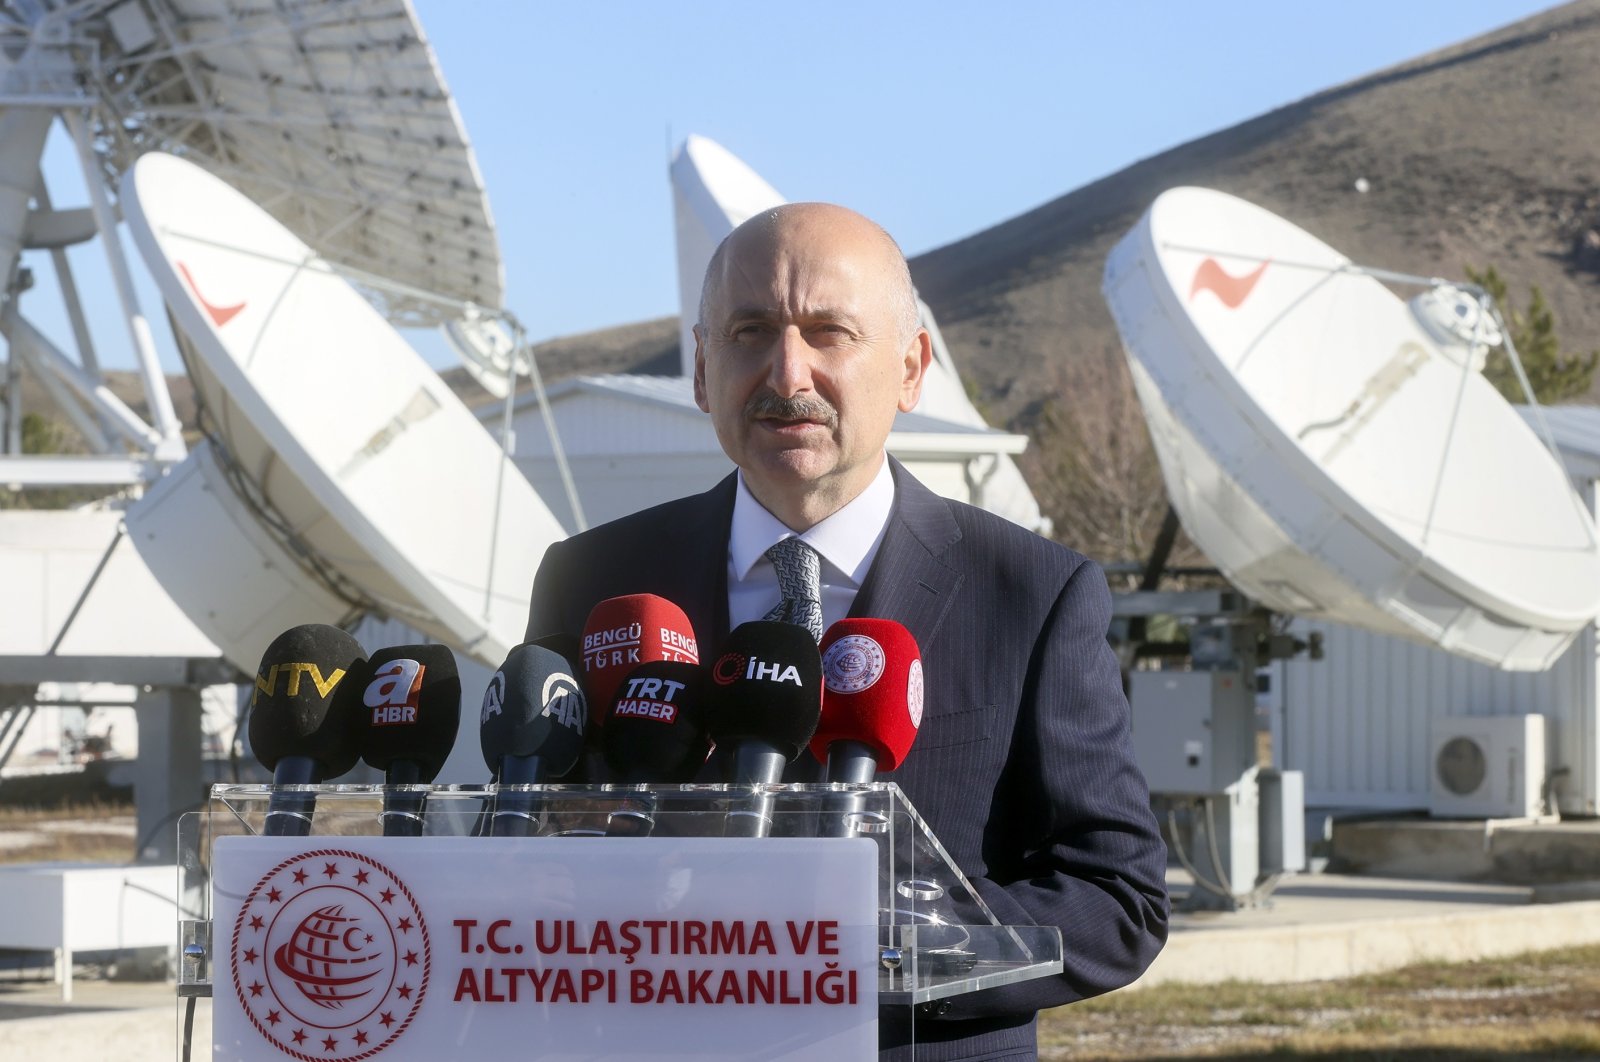 Transportation and Infrastructure Minister Adil Karaismailoğlu speaks during a press meeting in Türksat compound in Ankara, Turkey, Dec. 10, 2021. (AA Photo)